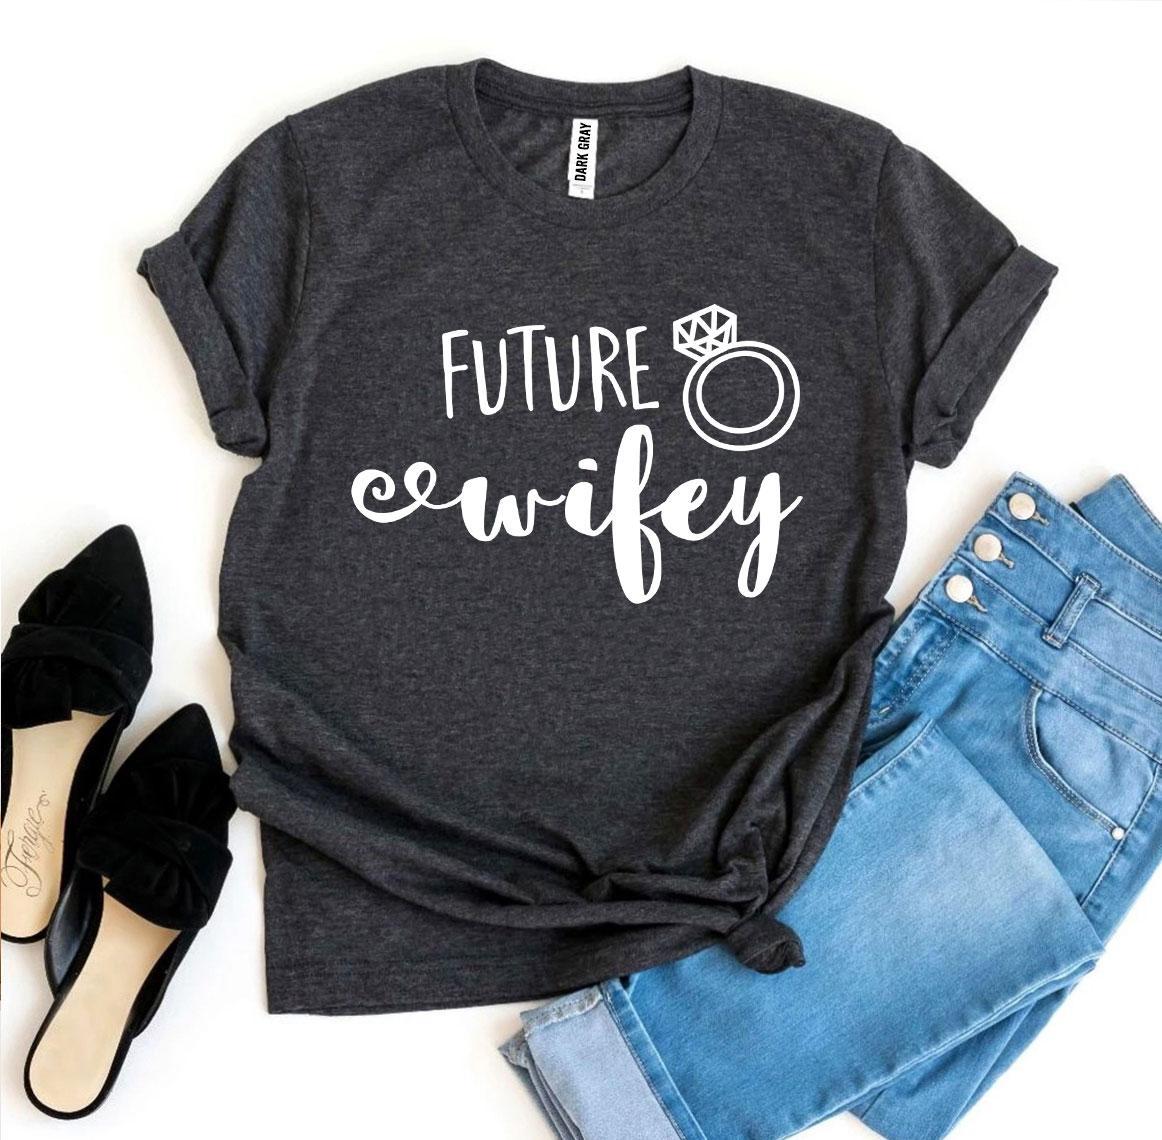 Future Wifey T-shirt